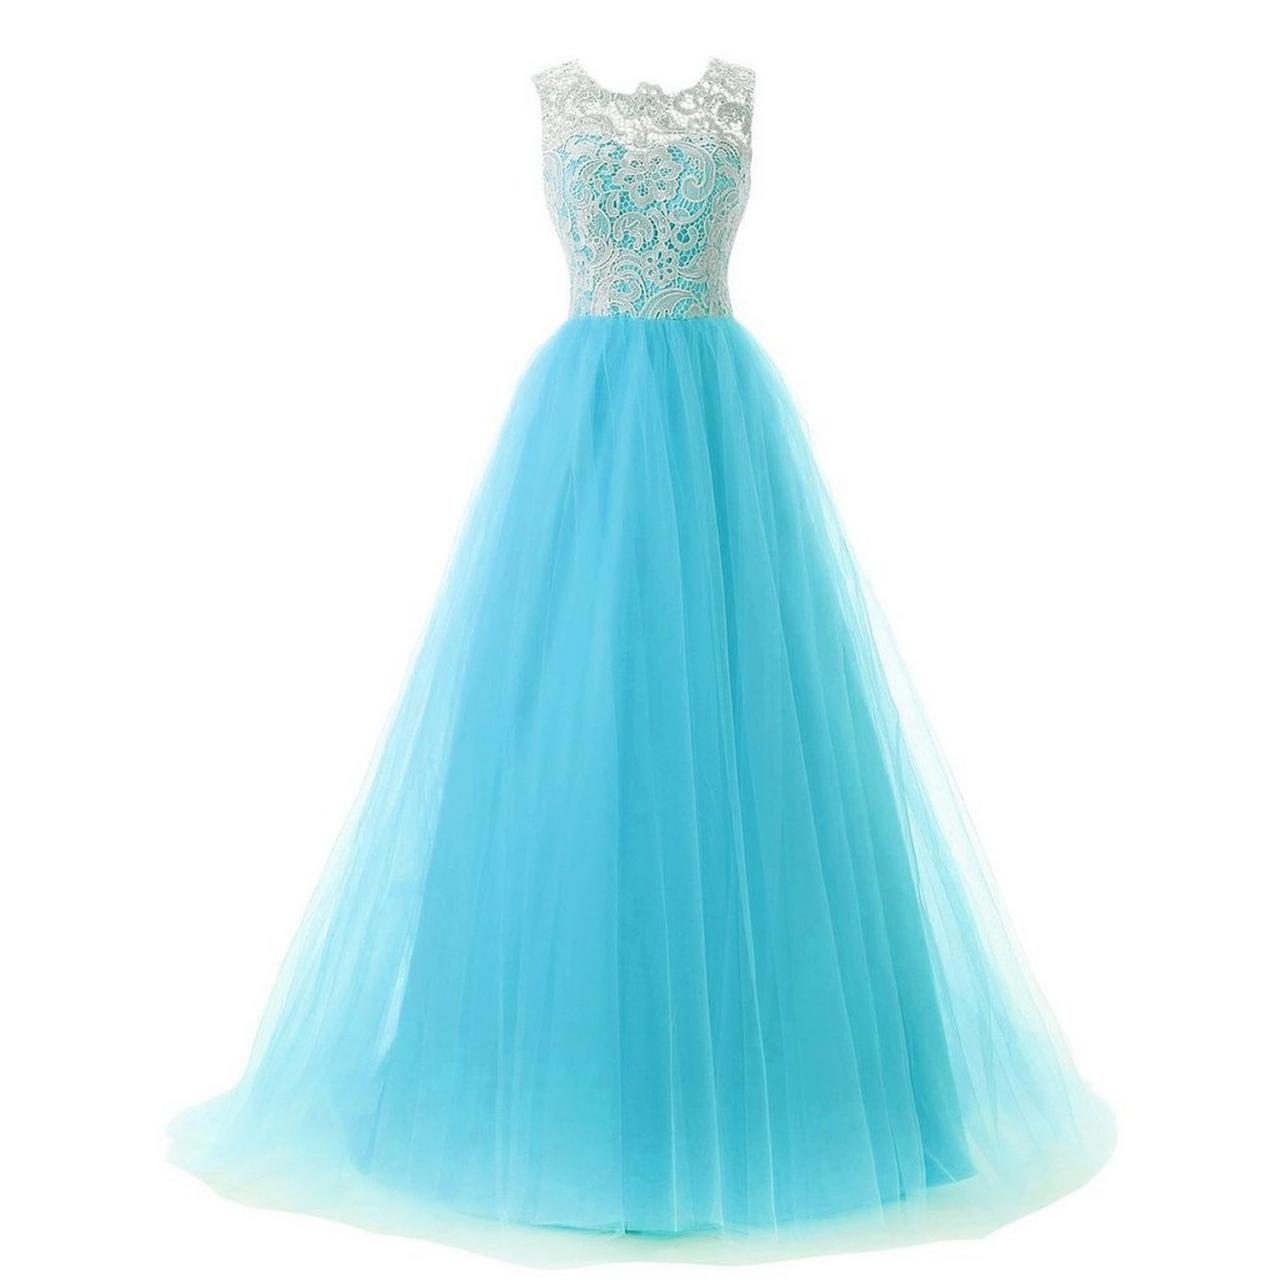 High Quality Sleeveless Lace Maxi Long Dress Evening Party Chiffon Dress - Light Blue